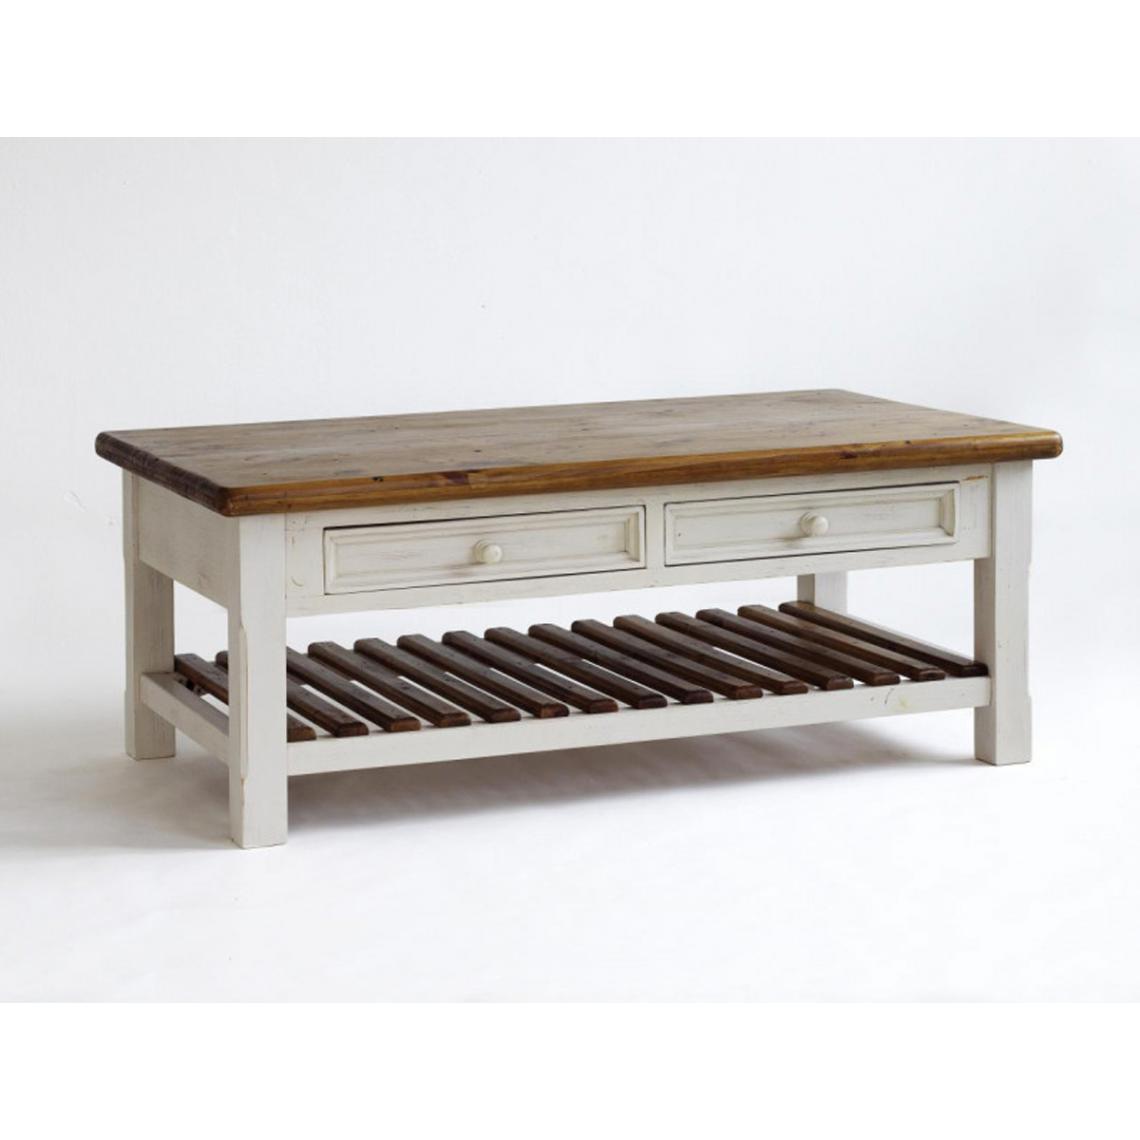 Pegane - Table basse avec rangements en pin massif coloris blanc/ miel - L.80 x H.55 x P.80 cm - Tables basses